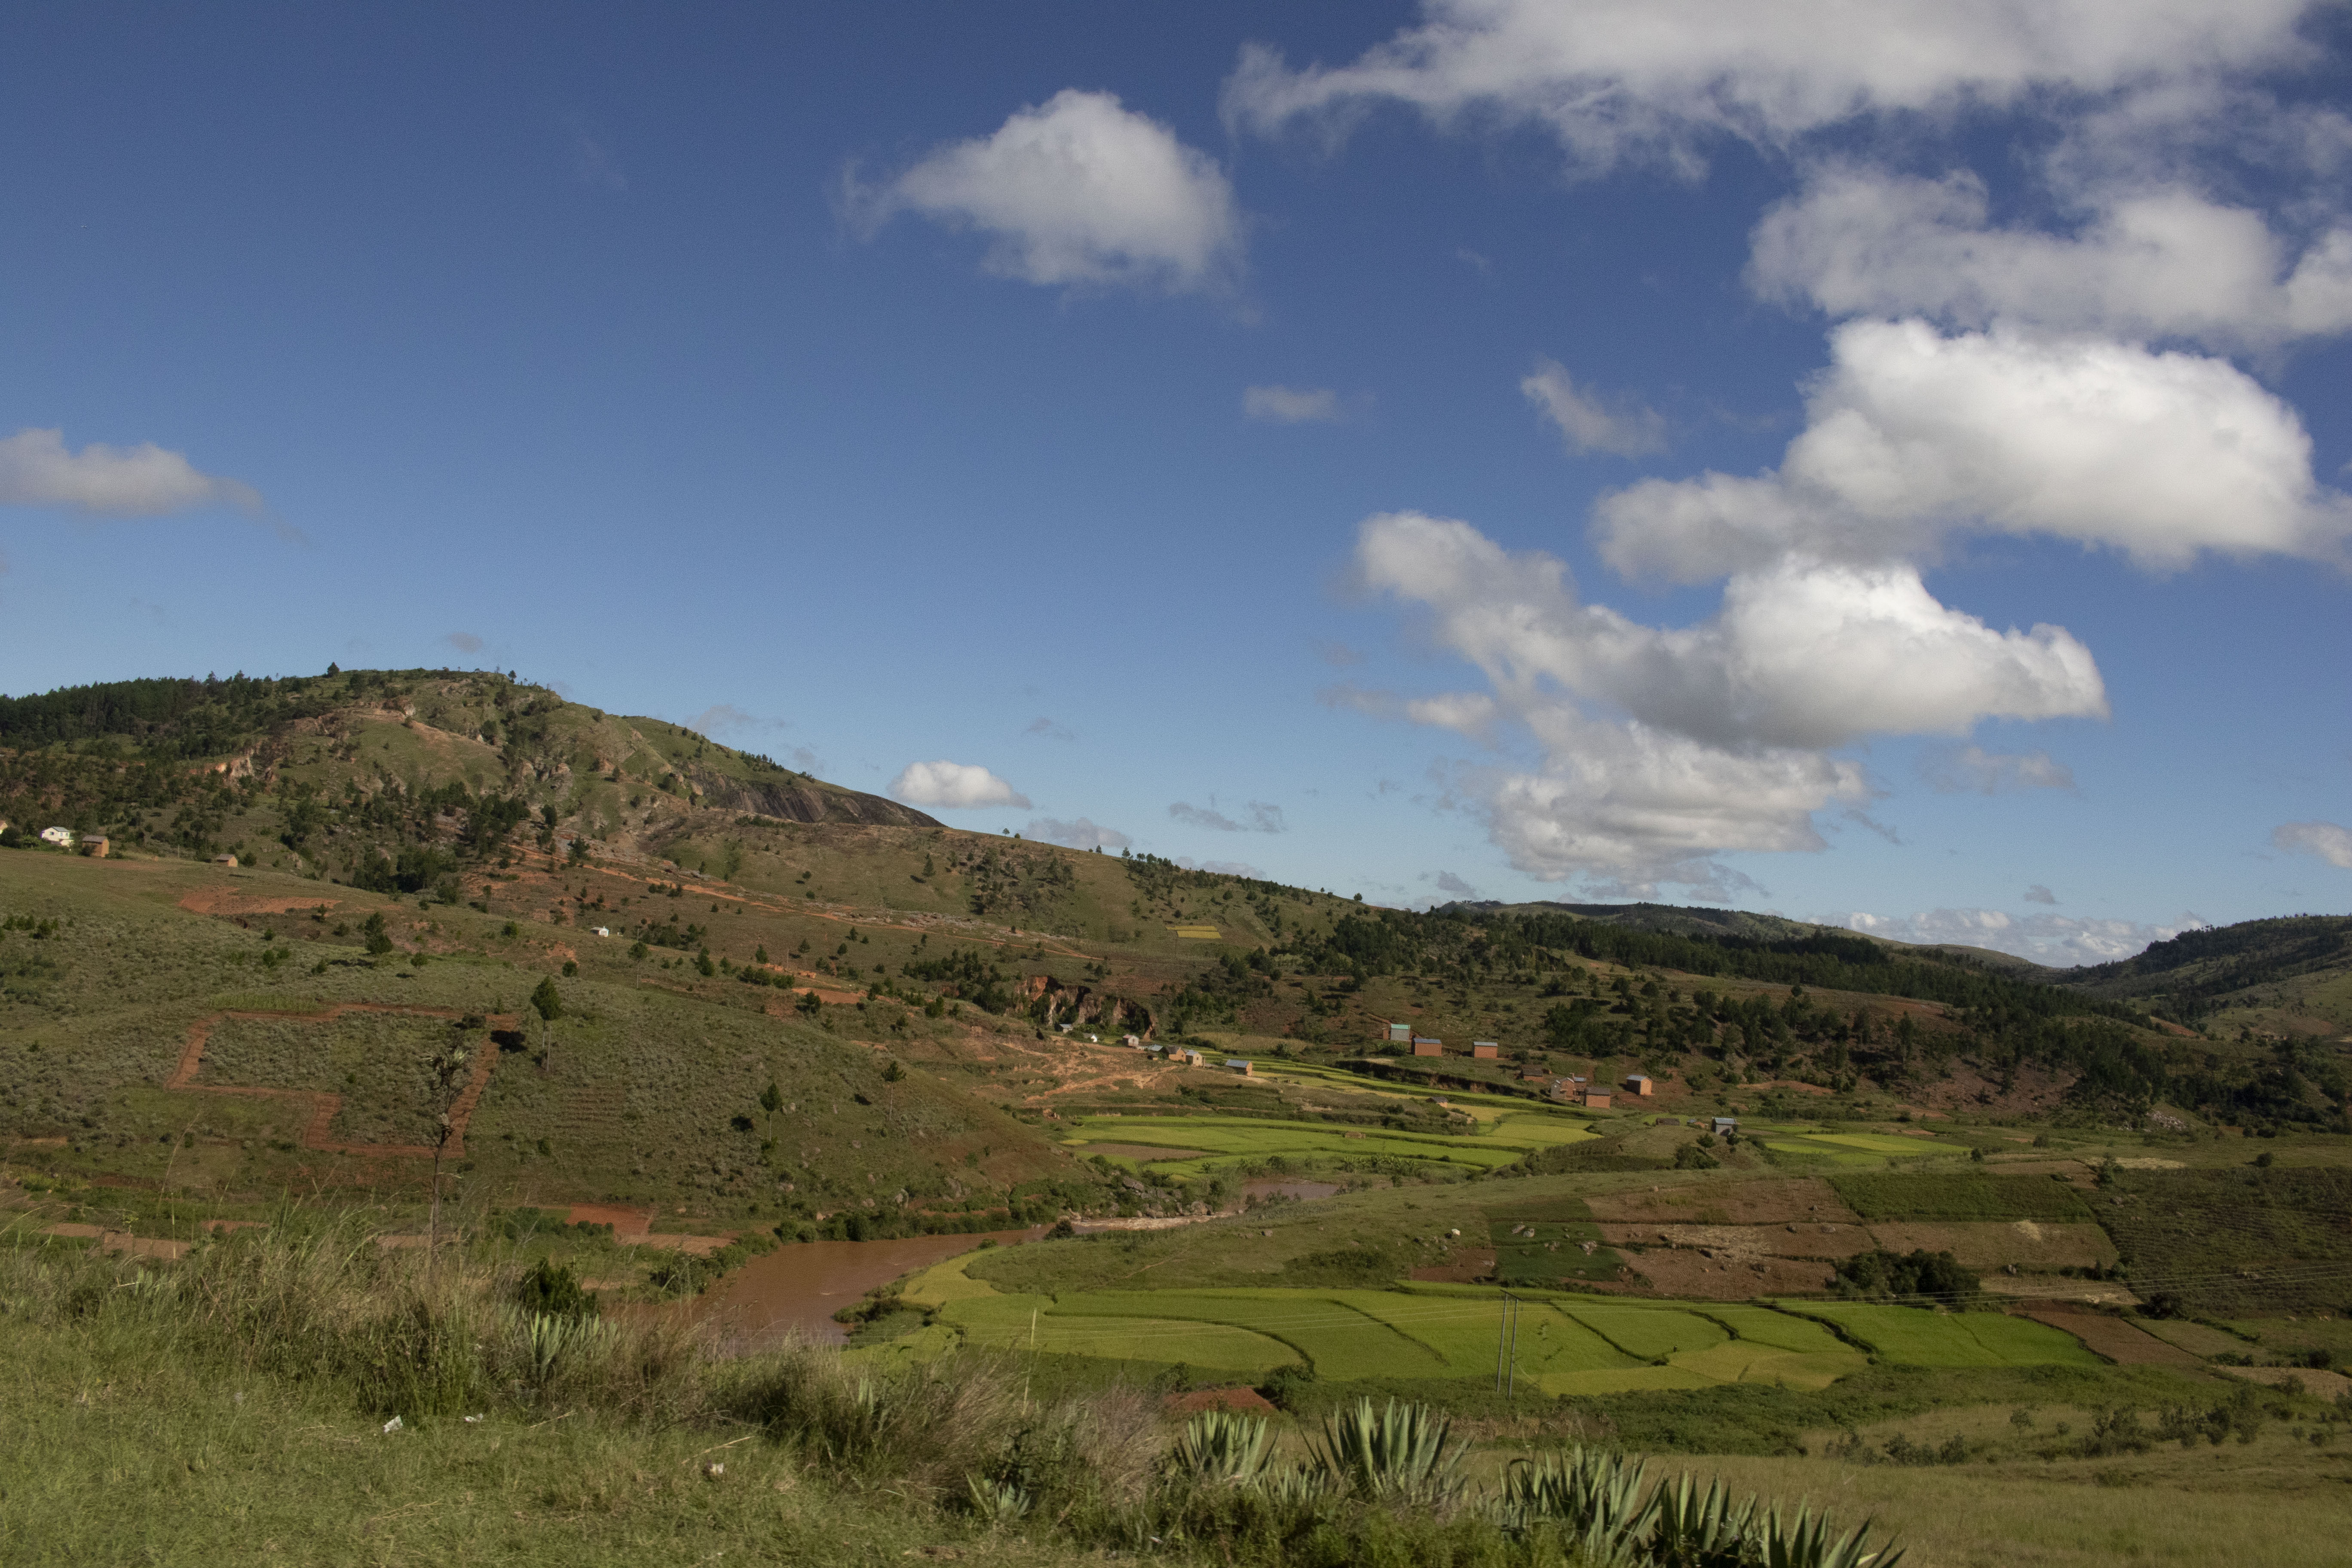 Another Madagascar Landscape